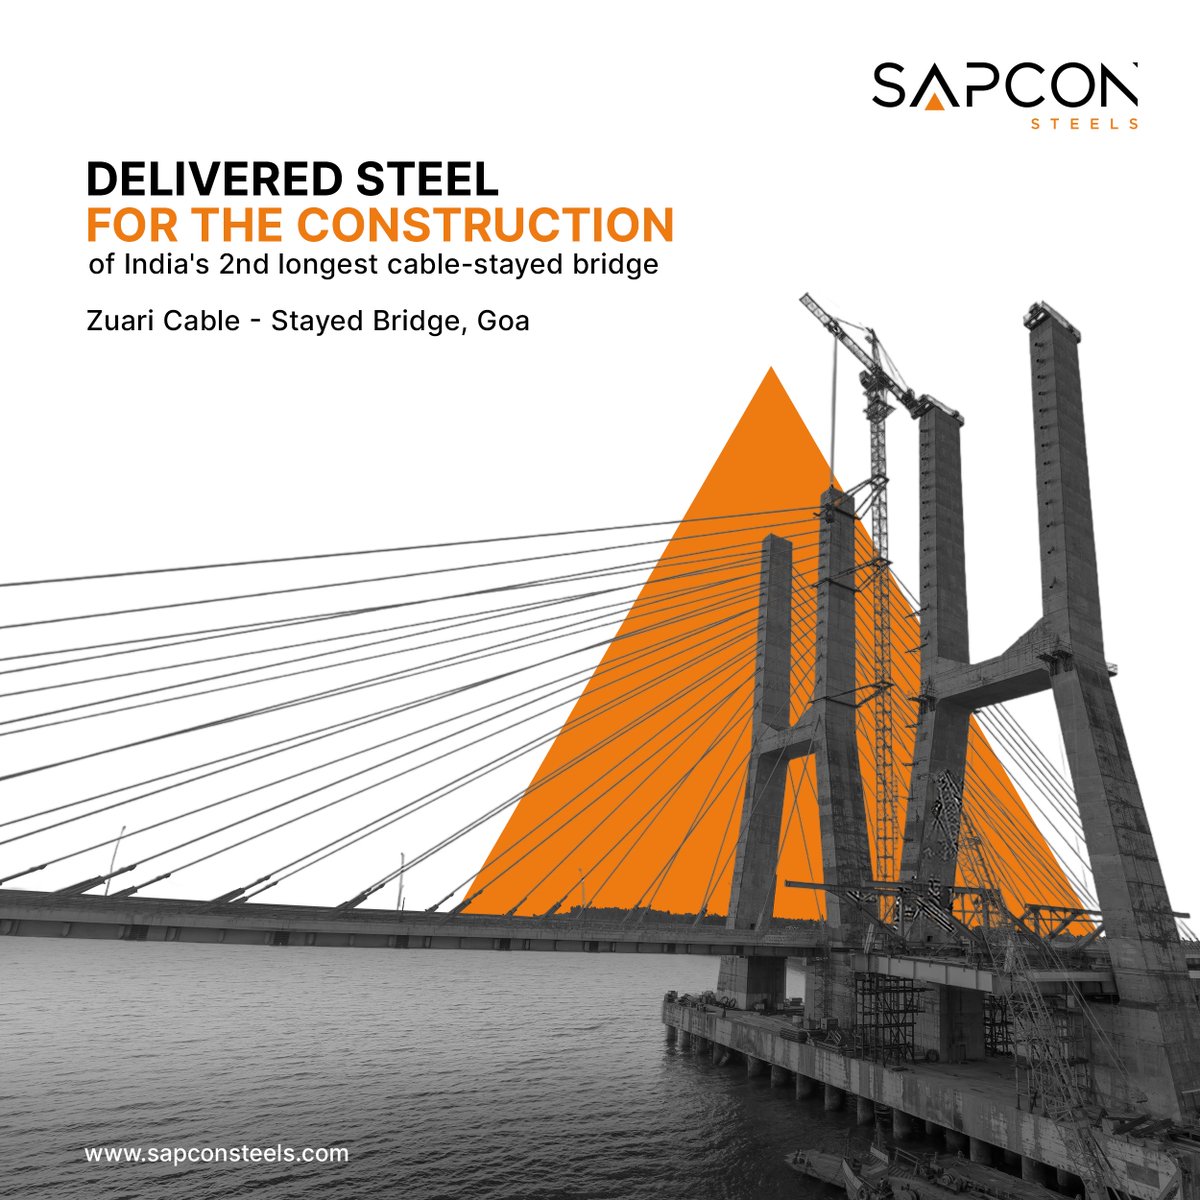 At Sapcon Steels we are laying the foundation of India's 2nd longest cable stayed bridge with our timely steel supply, the Zuari Cable Bridge, Goa #ManoharSetu 
 
#NewZuariBridge #ZuariCableBridgeGoa #NHAI #BuildingANation #SapconSteels #Sourcesmartersteels